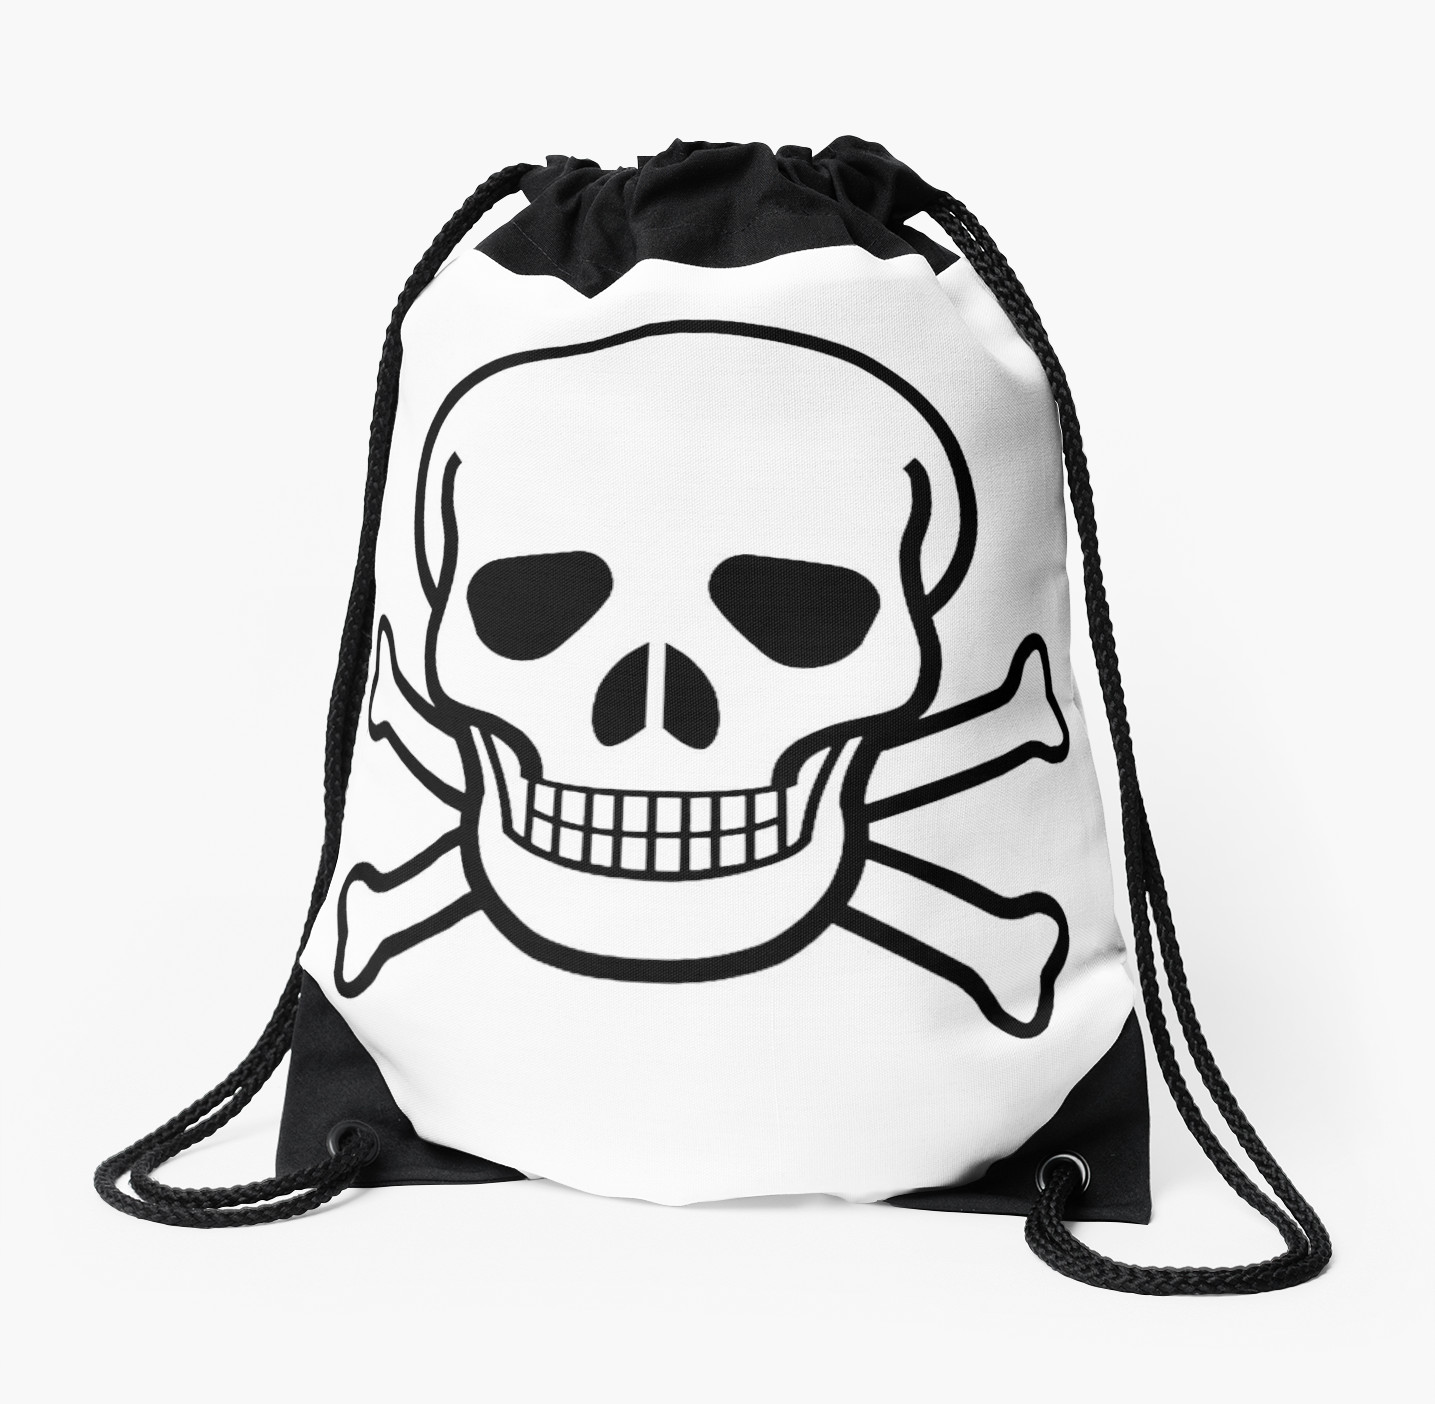 Skull And Crossbones Drawing at GetDrawings | Free download